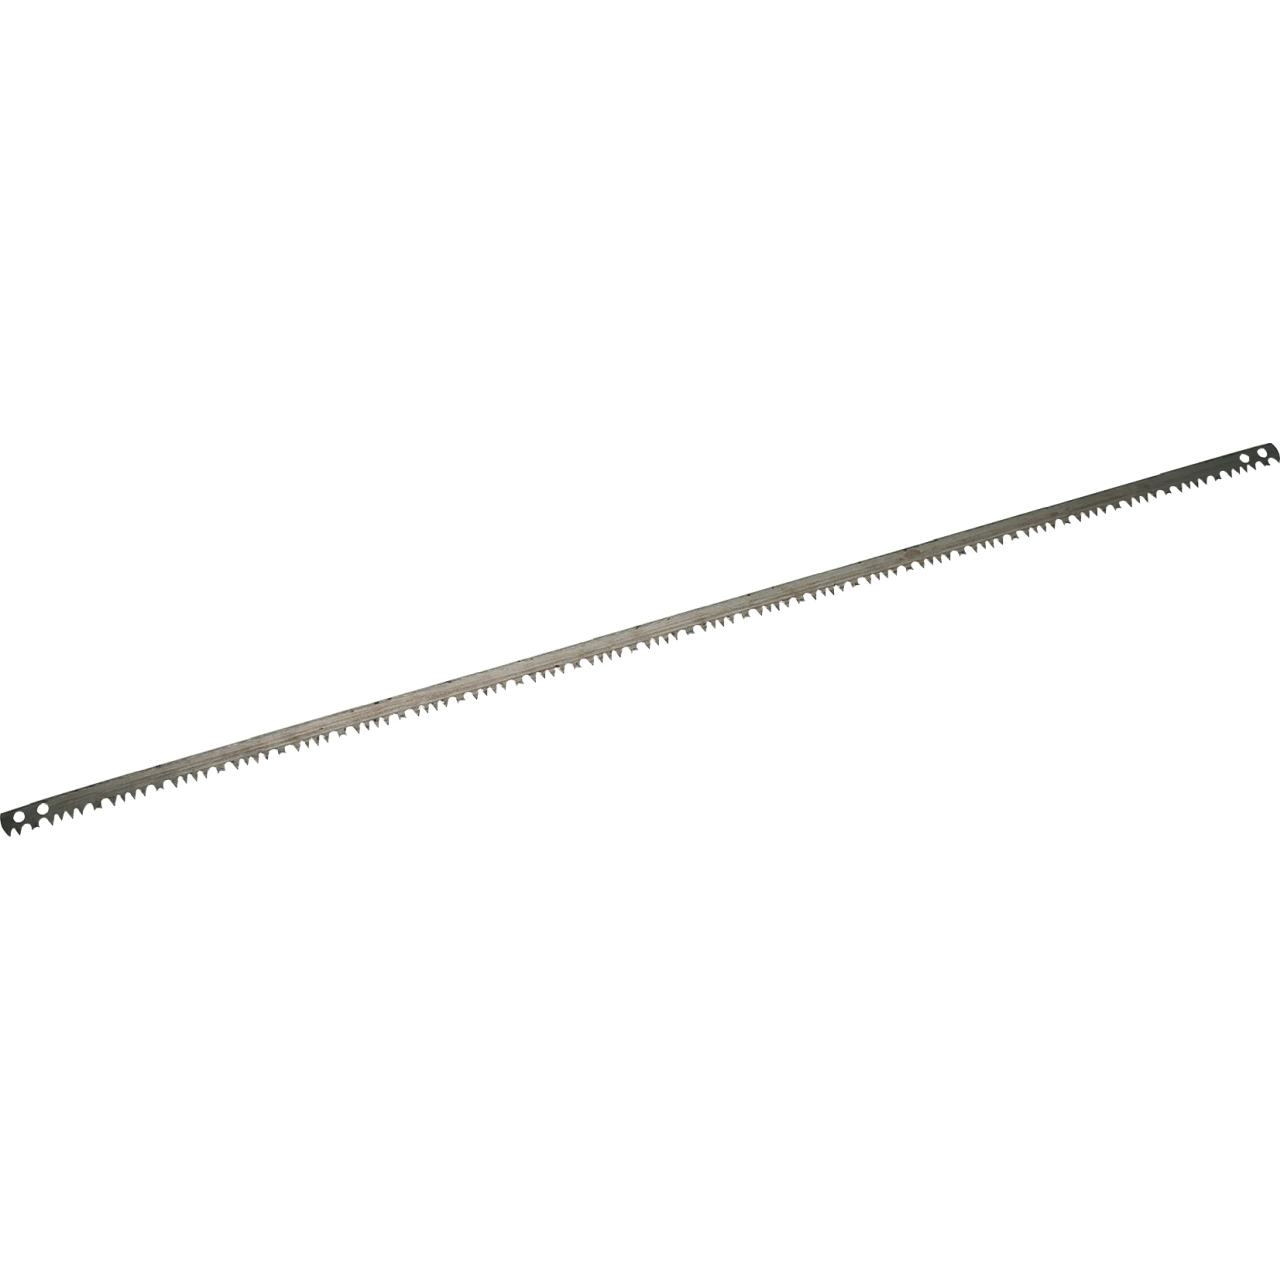 Triuso Bügelsägeblatt 762 mm, Hobelzahn (Zahnform 10)